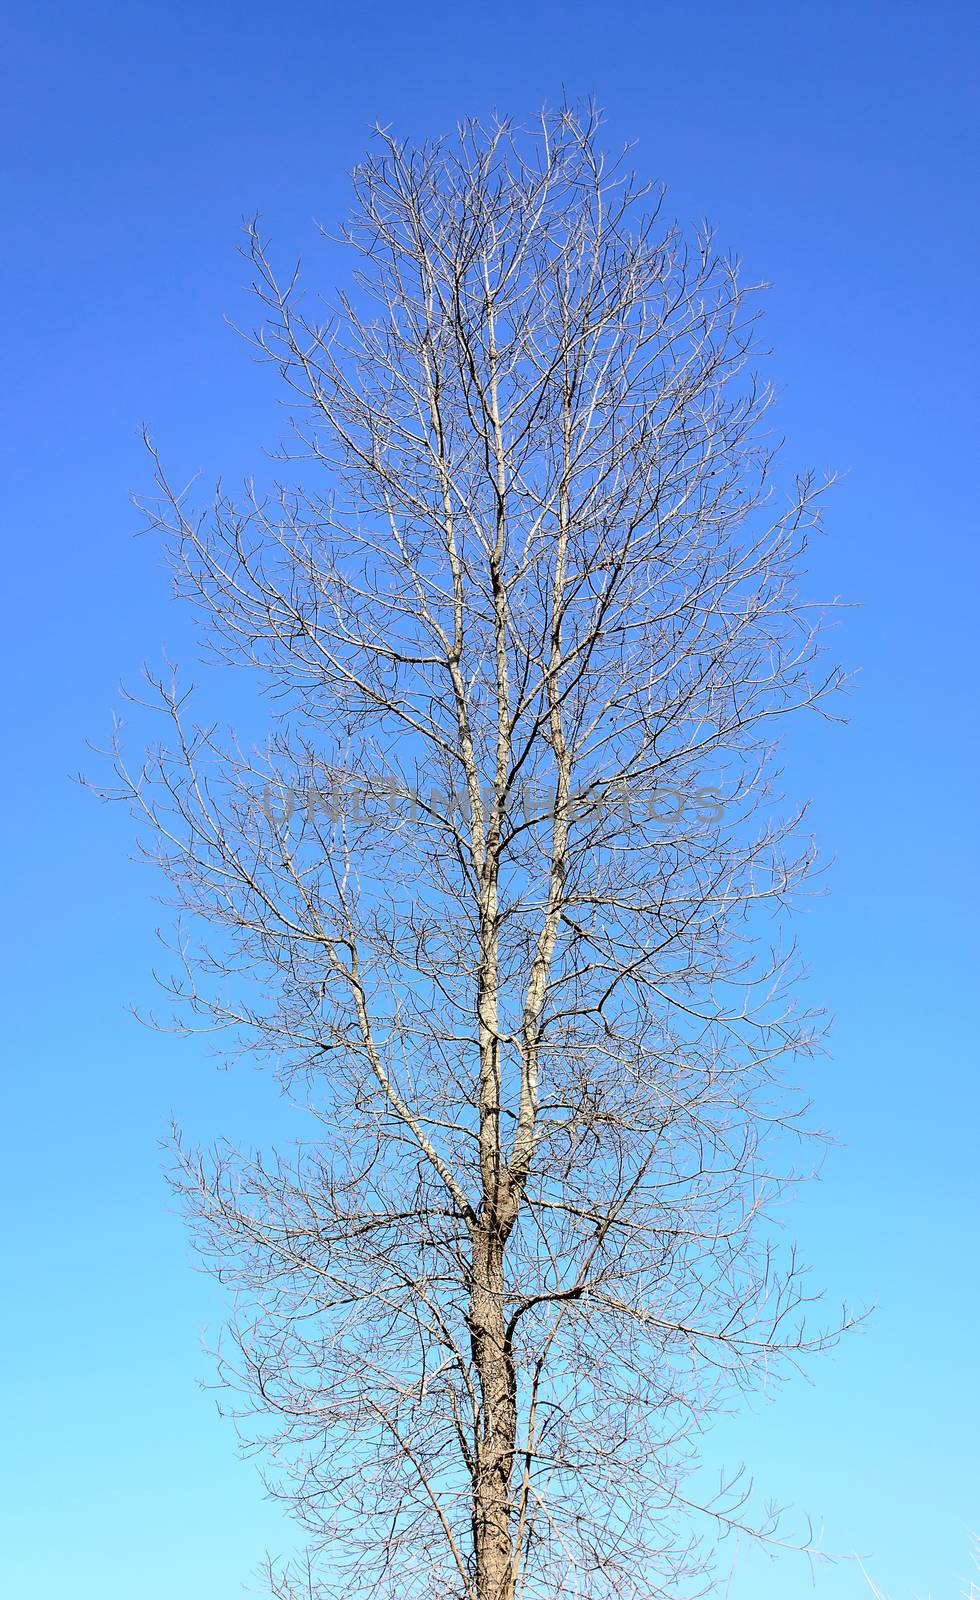 The Naked Tree on Blue Sky.